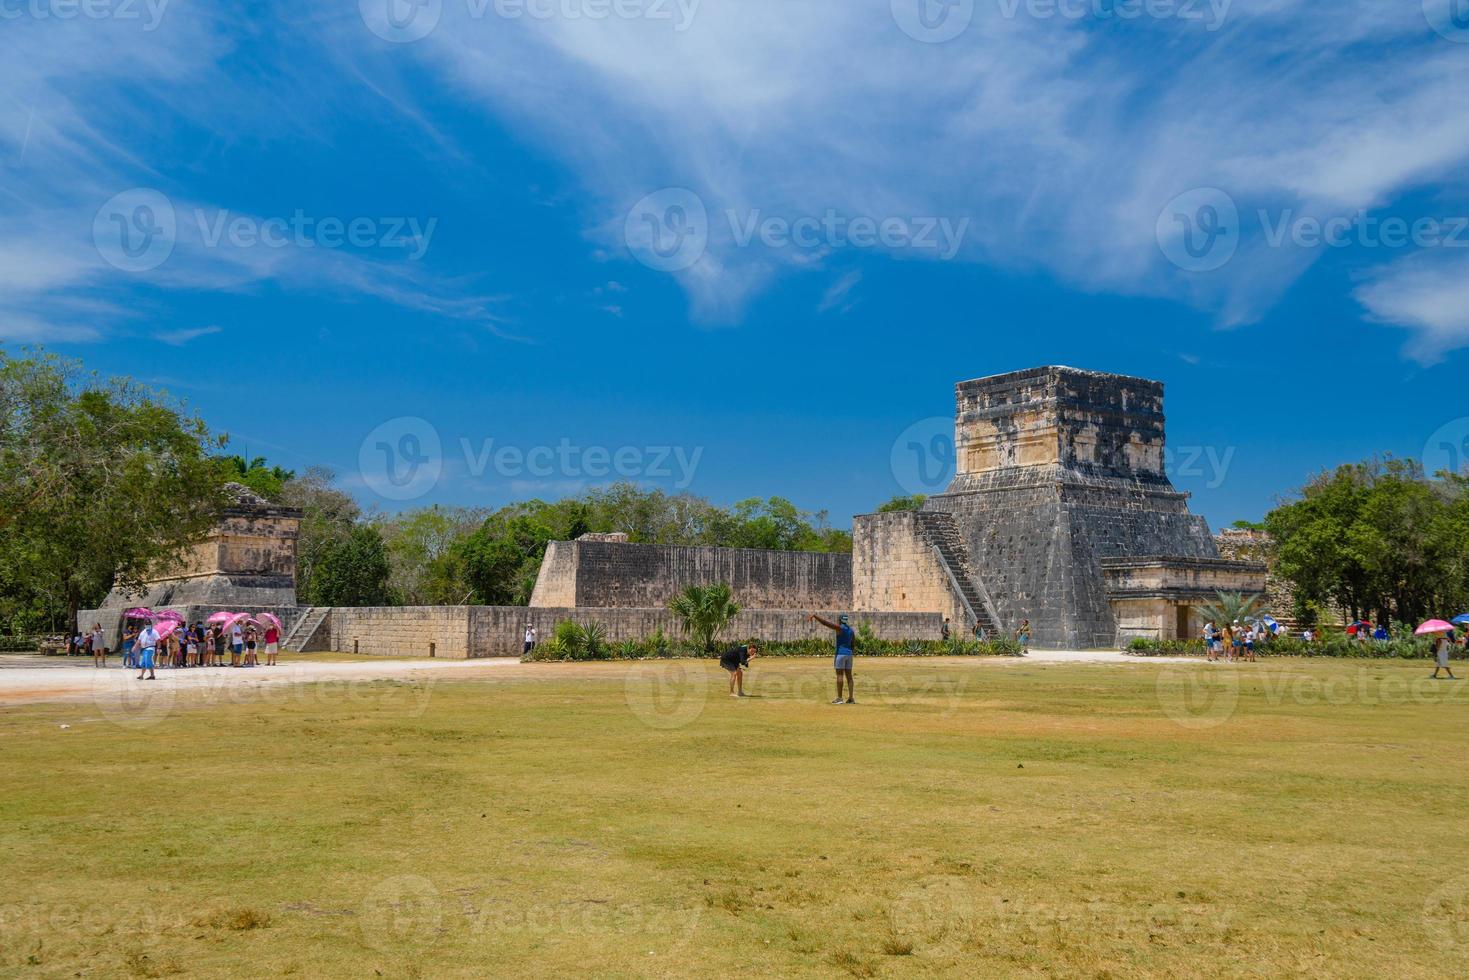 den stora bollplanen, gran juego de pelota i chichen itzas arkeologiska plats i Yucatan, Mexiko foto